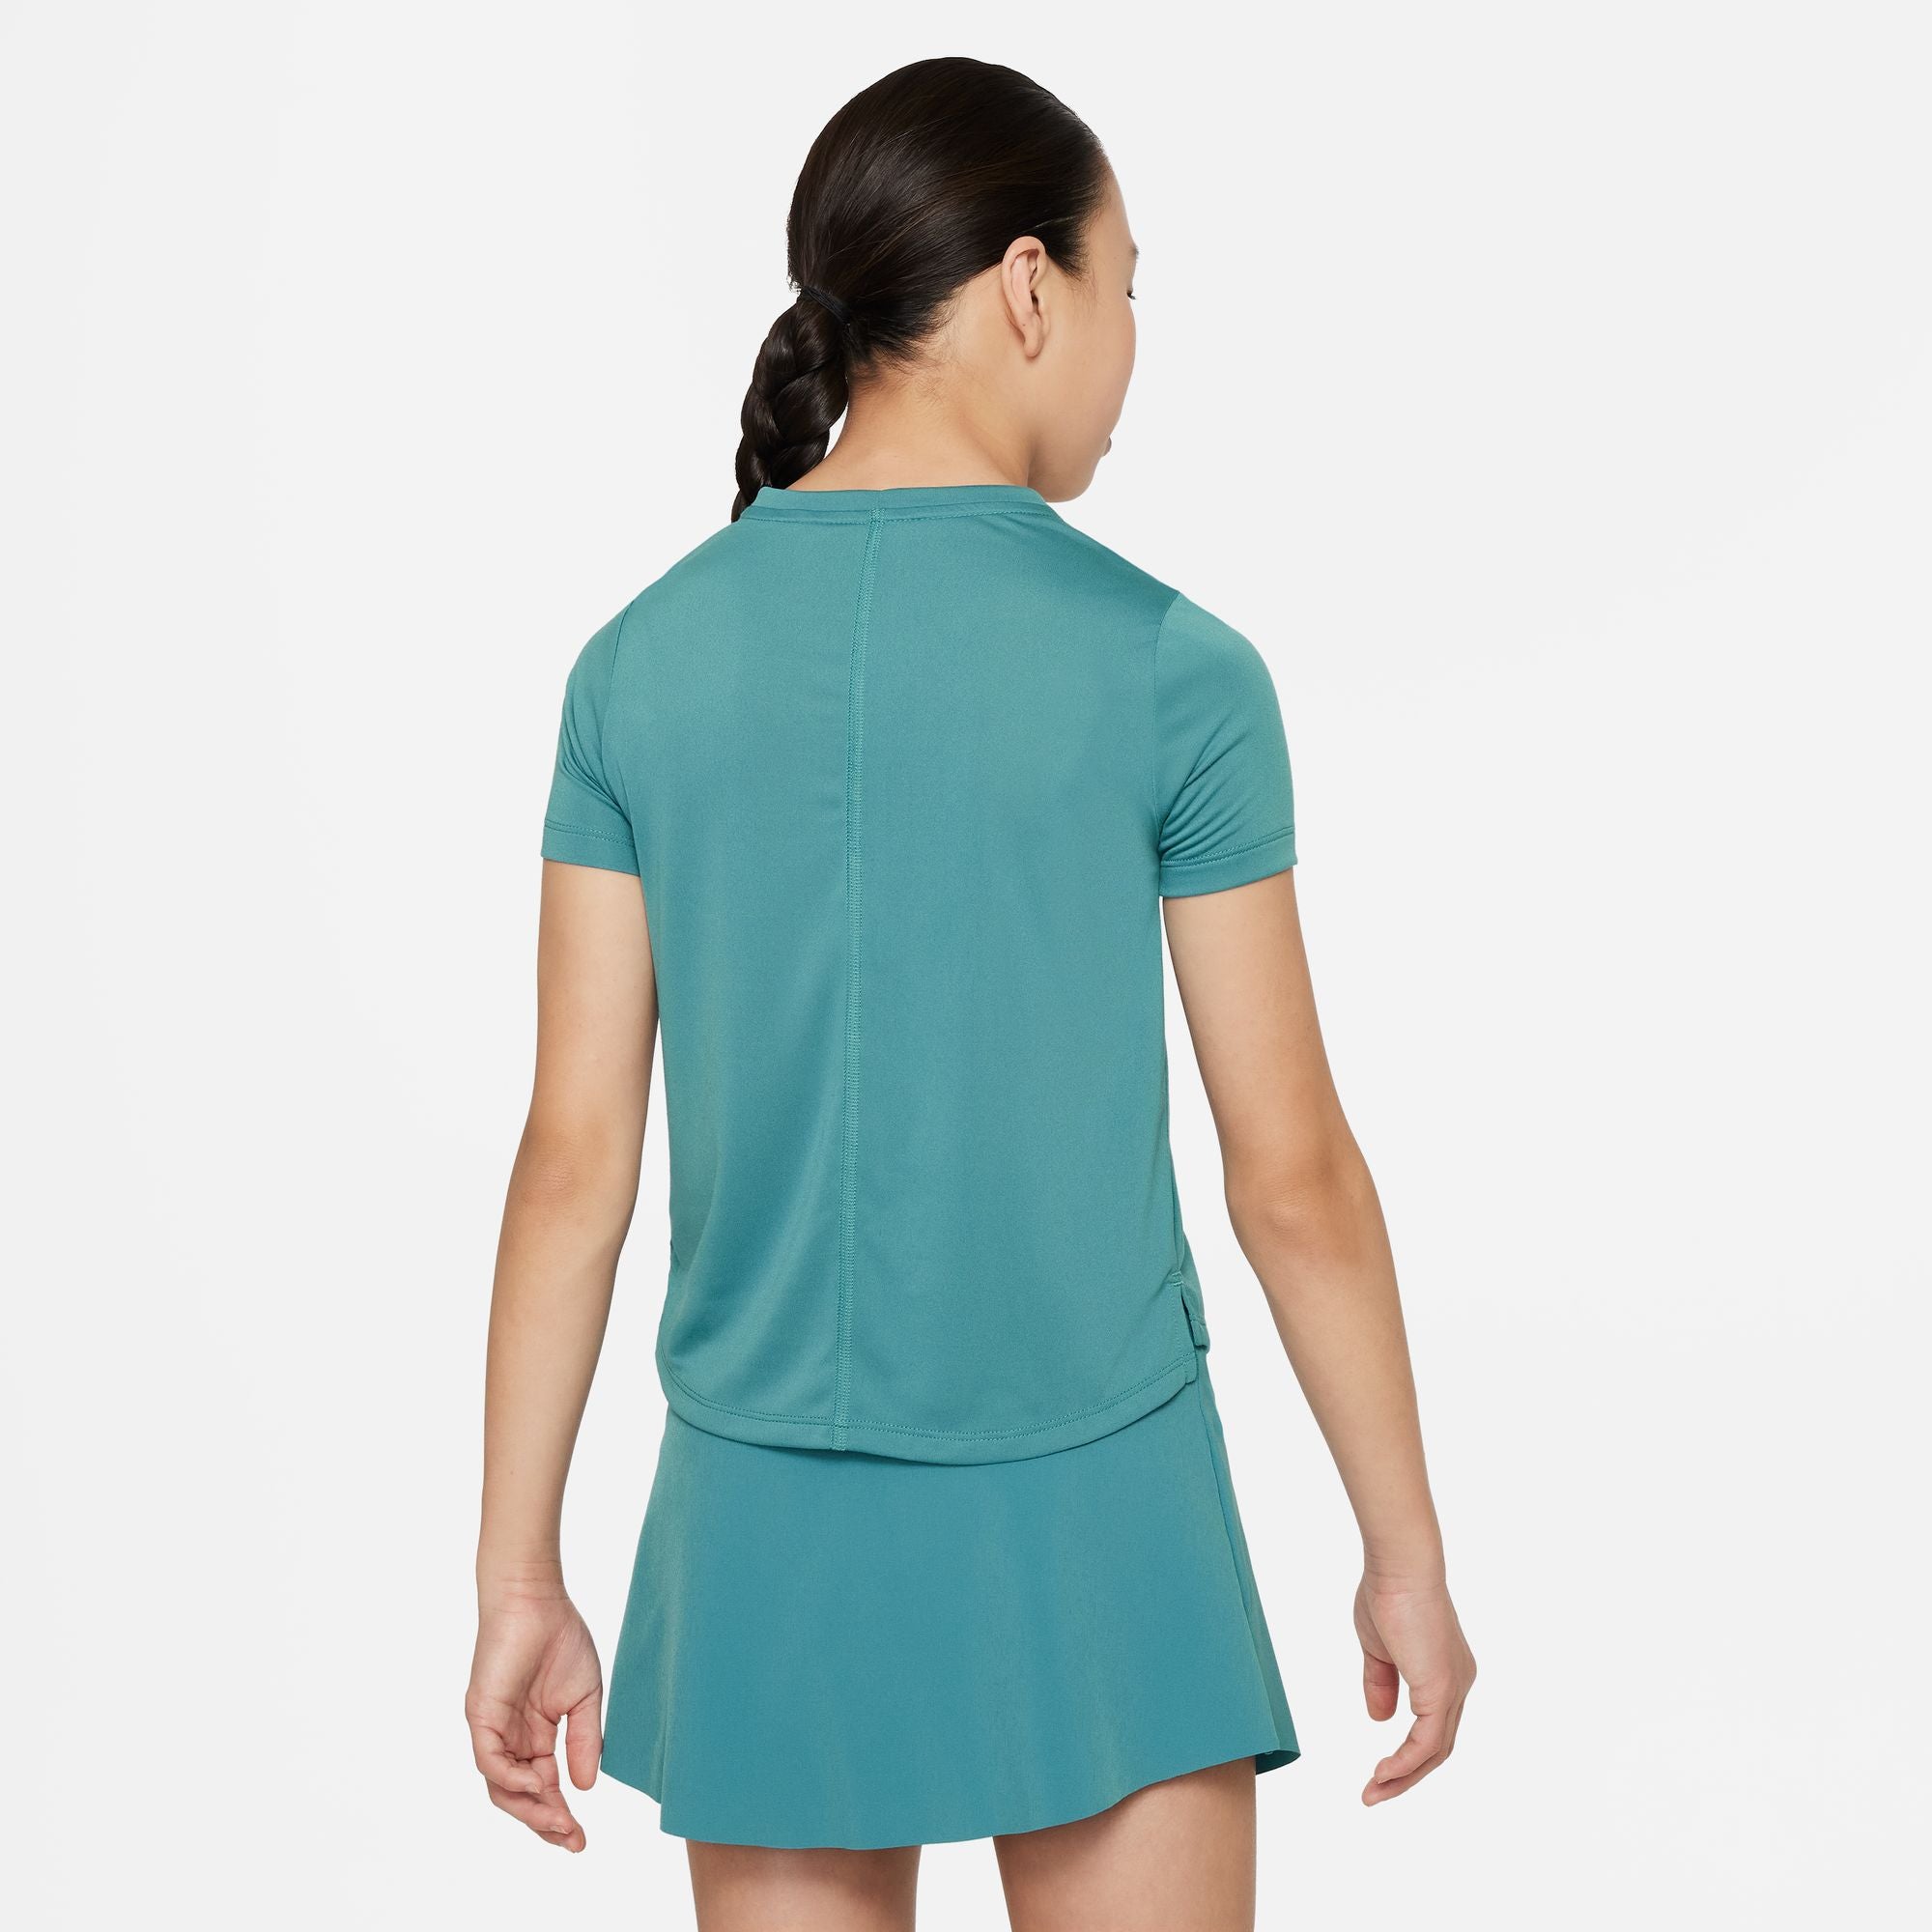 Nike Dri-FIT One Swoosh Girls' Short Sleeve Top Green (2)